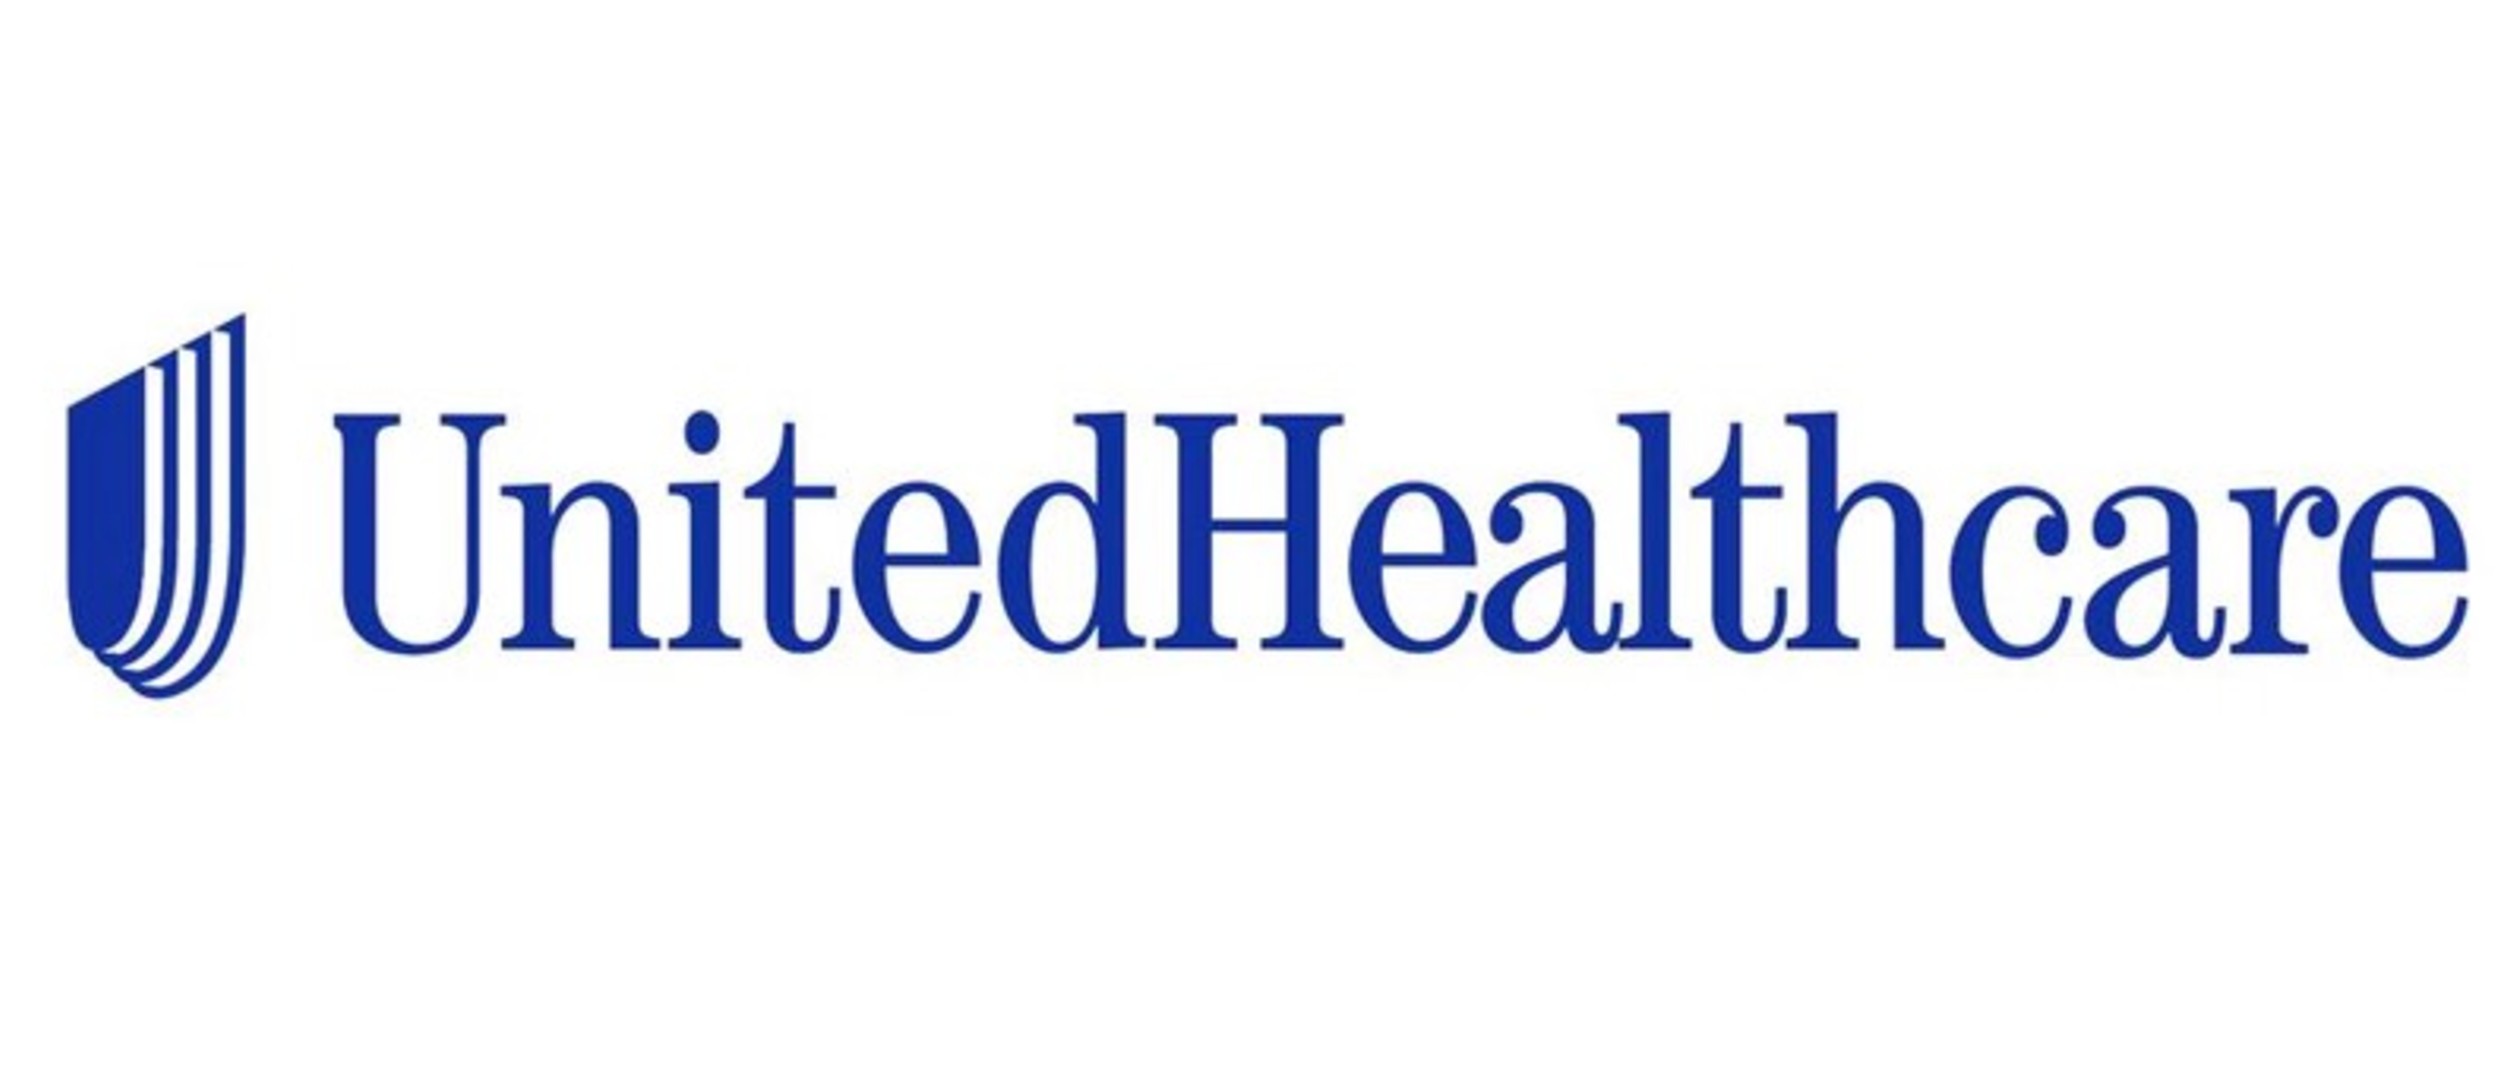 UnitedHealthcare Health Insurance Review | Top Ten Reviews